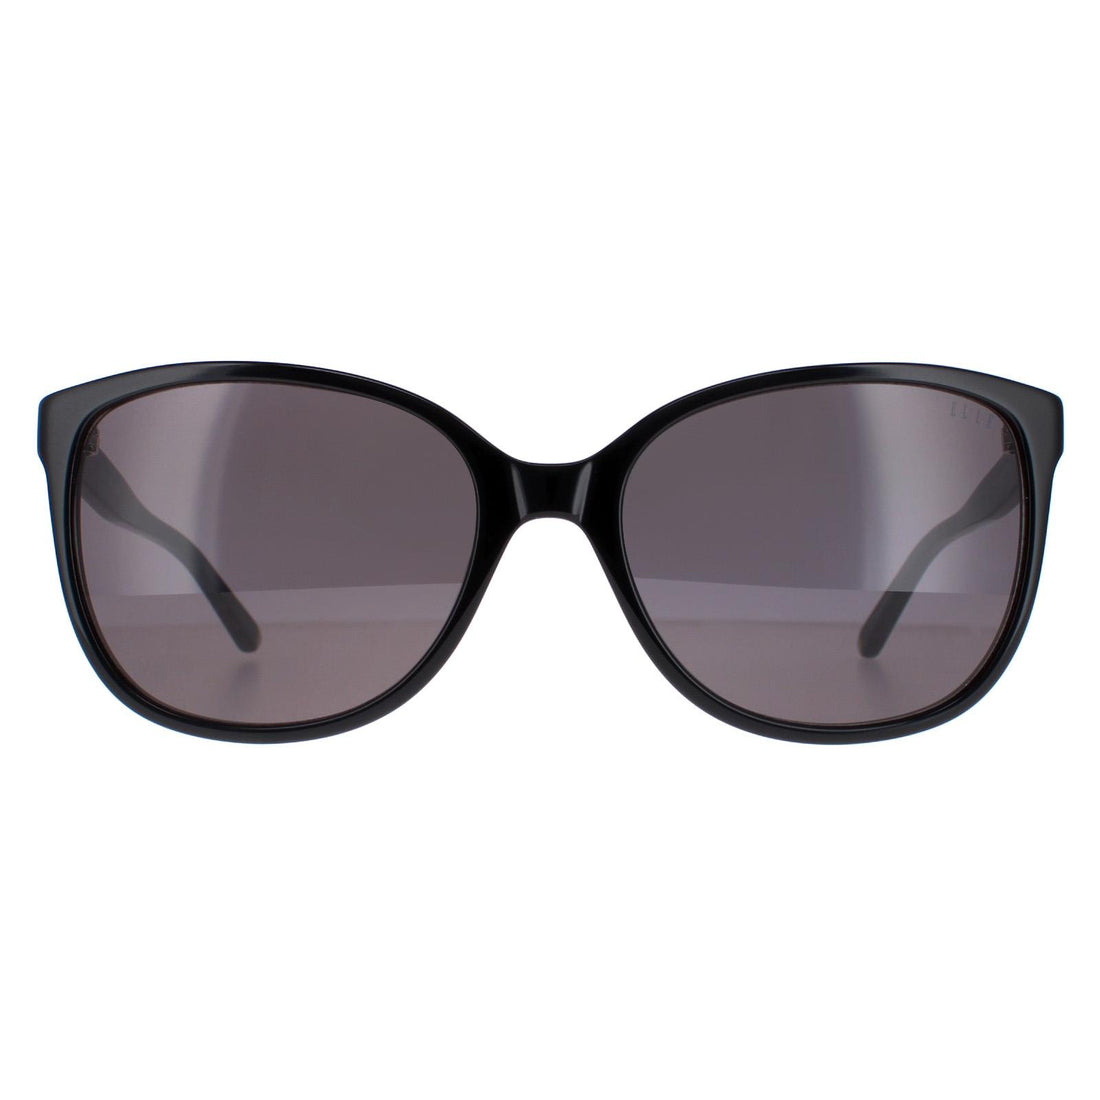 Elle 14888 Sunglasses Black / Grey